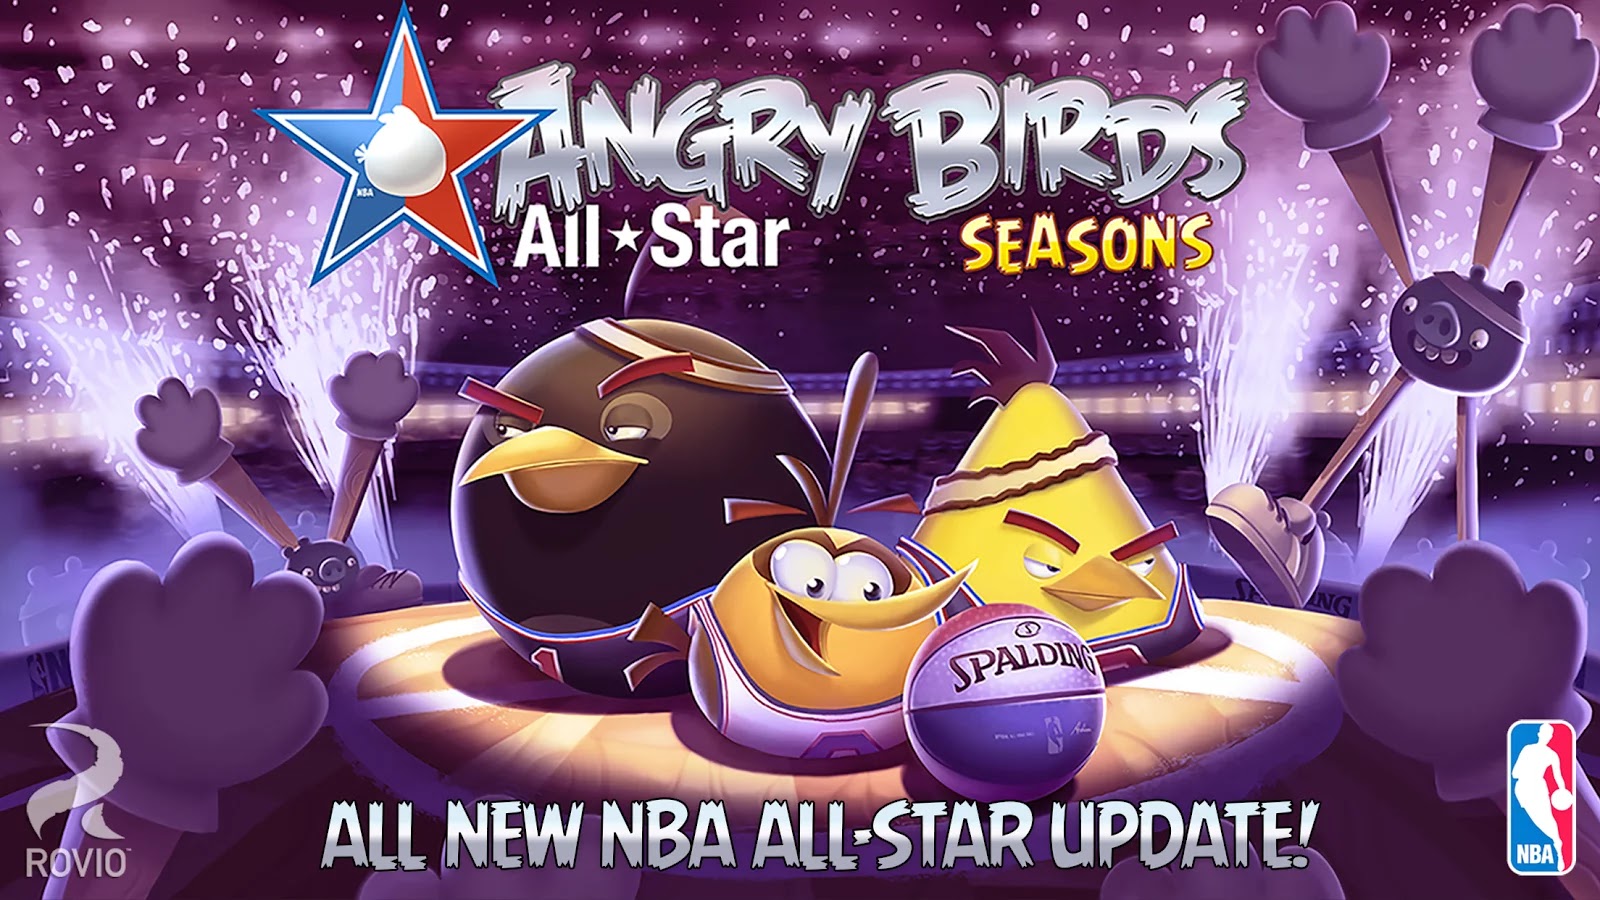 Angry Birds Seasons v5.2.5 Mod